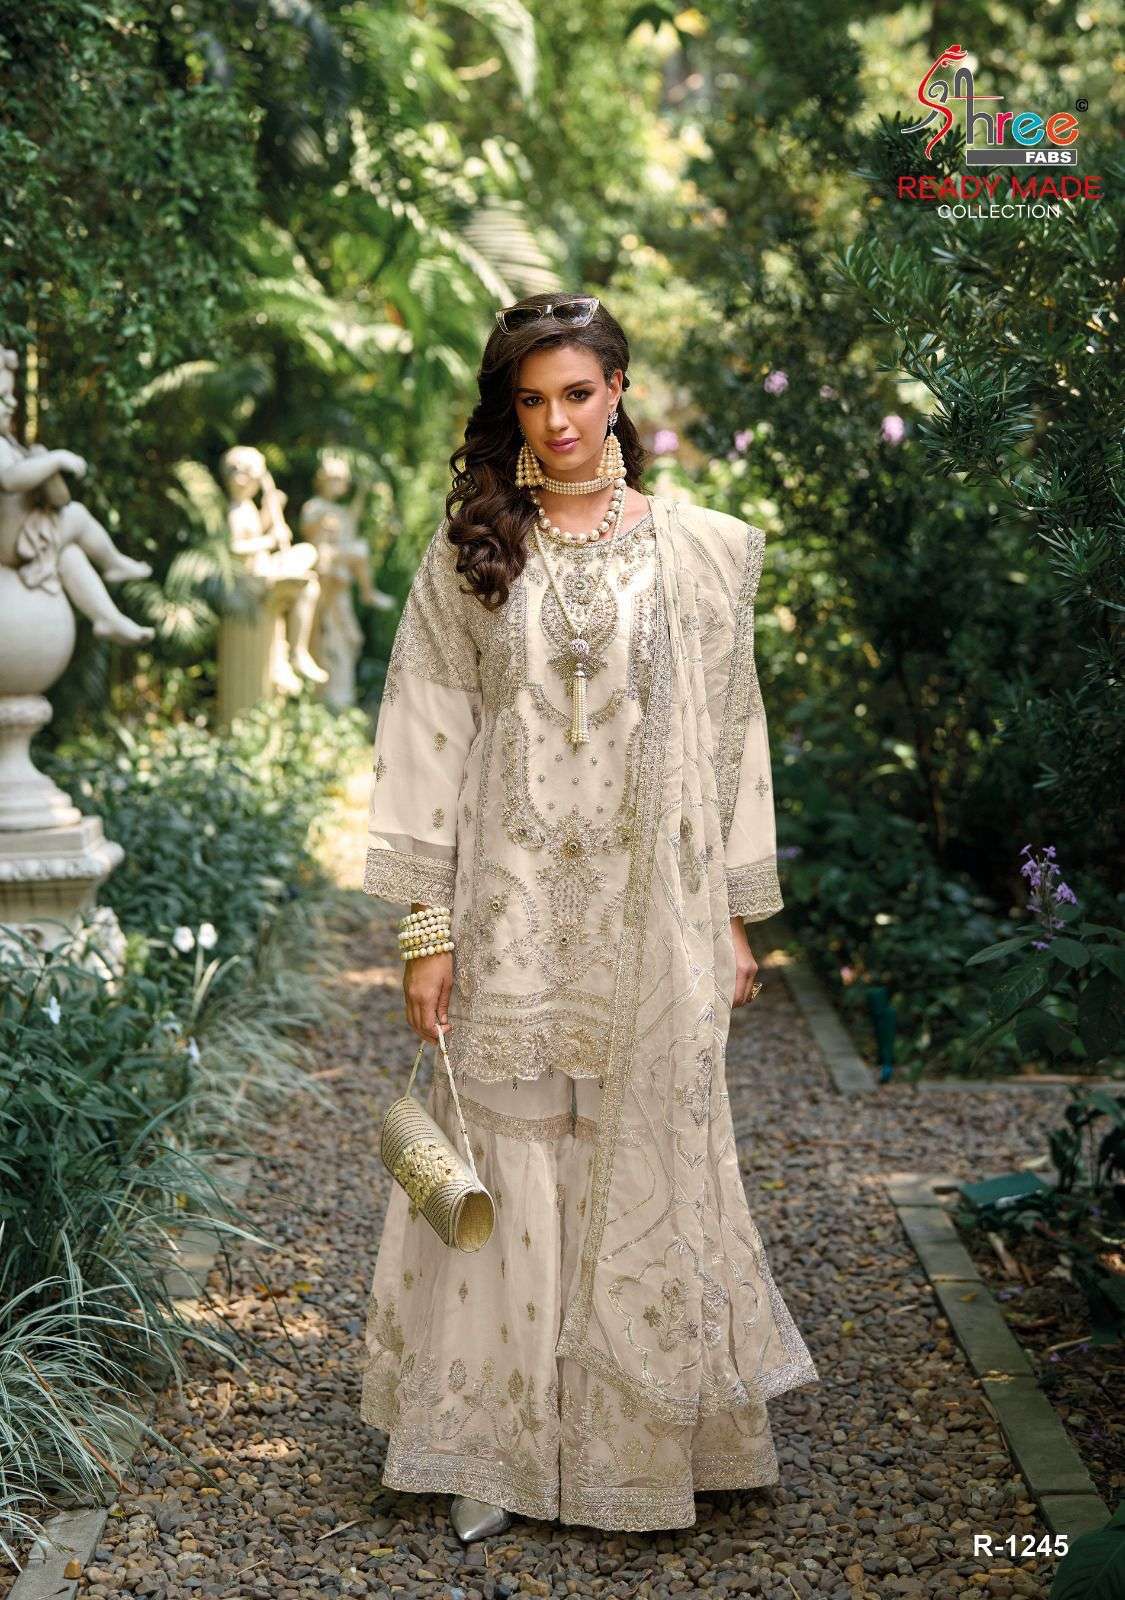 Shree Fabs R 1245 Colors Pakistani Designer Wedding Dress Latest Collection